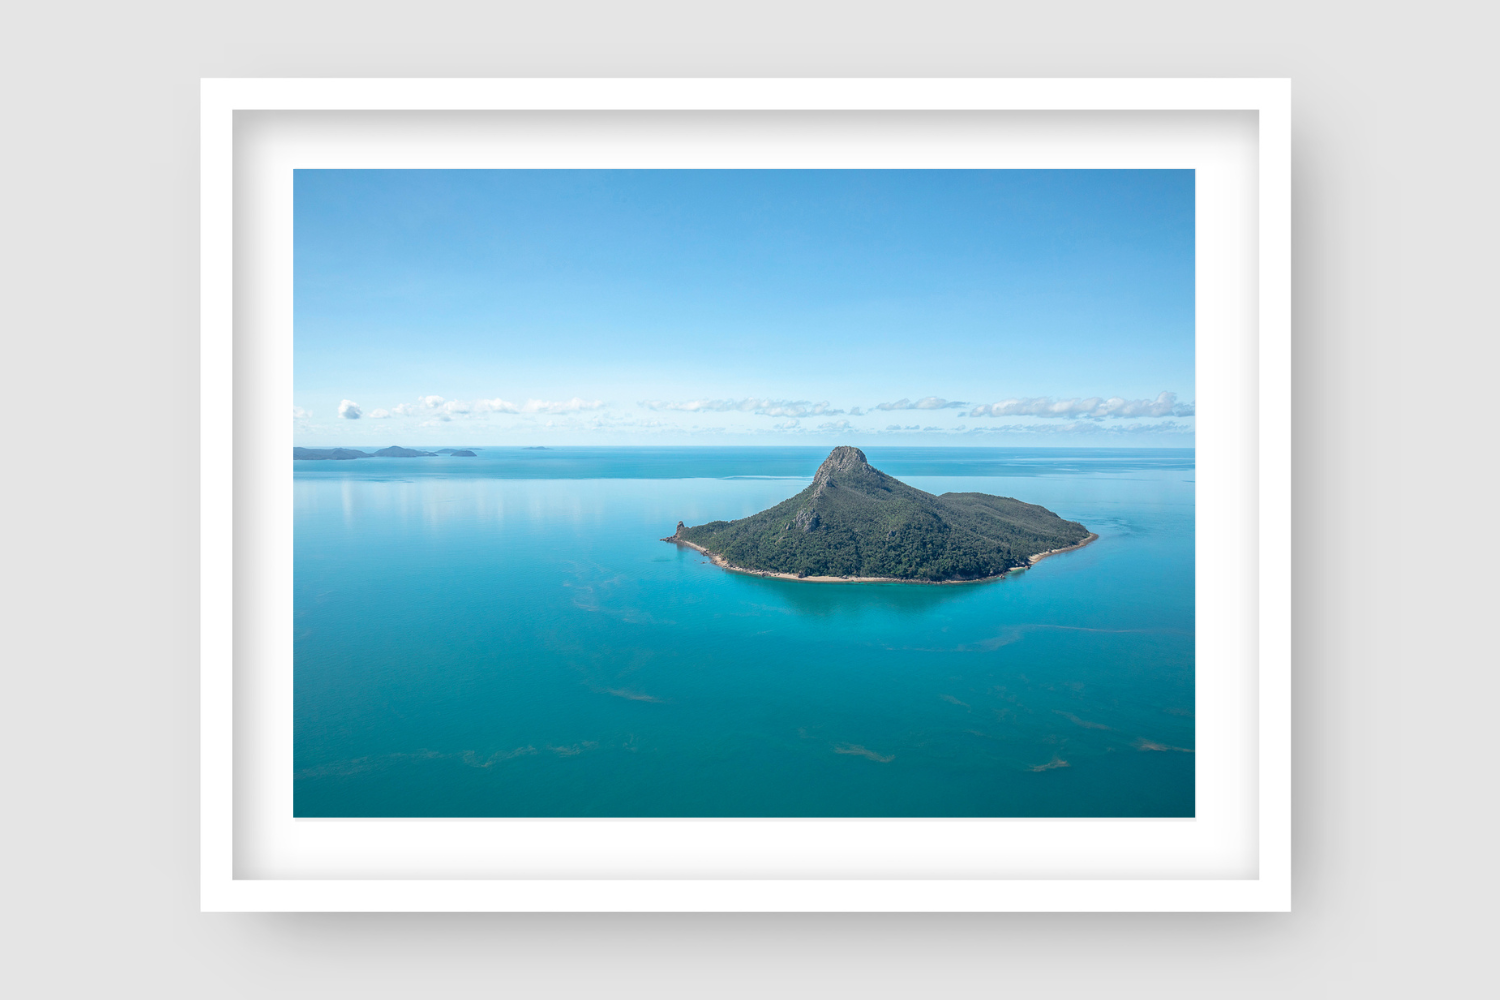 flat calm blue ocean waters surrounding a tall mountainous island